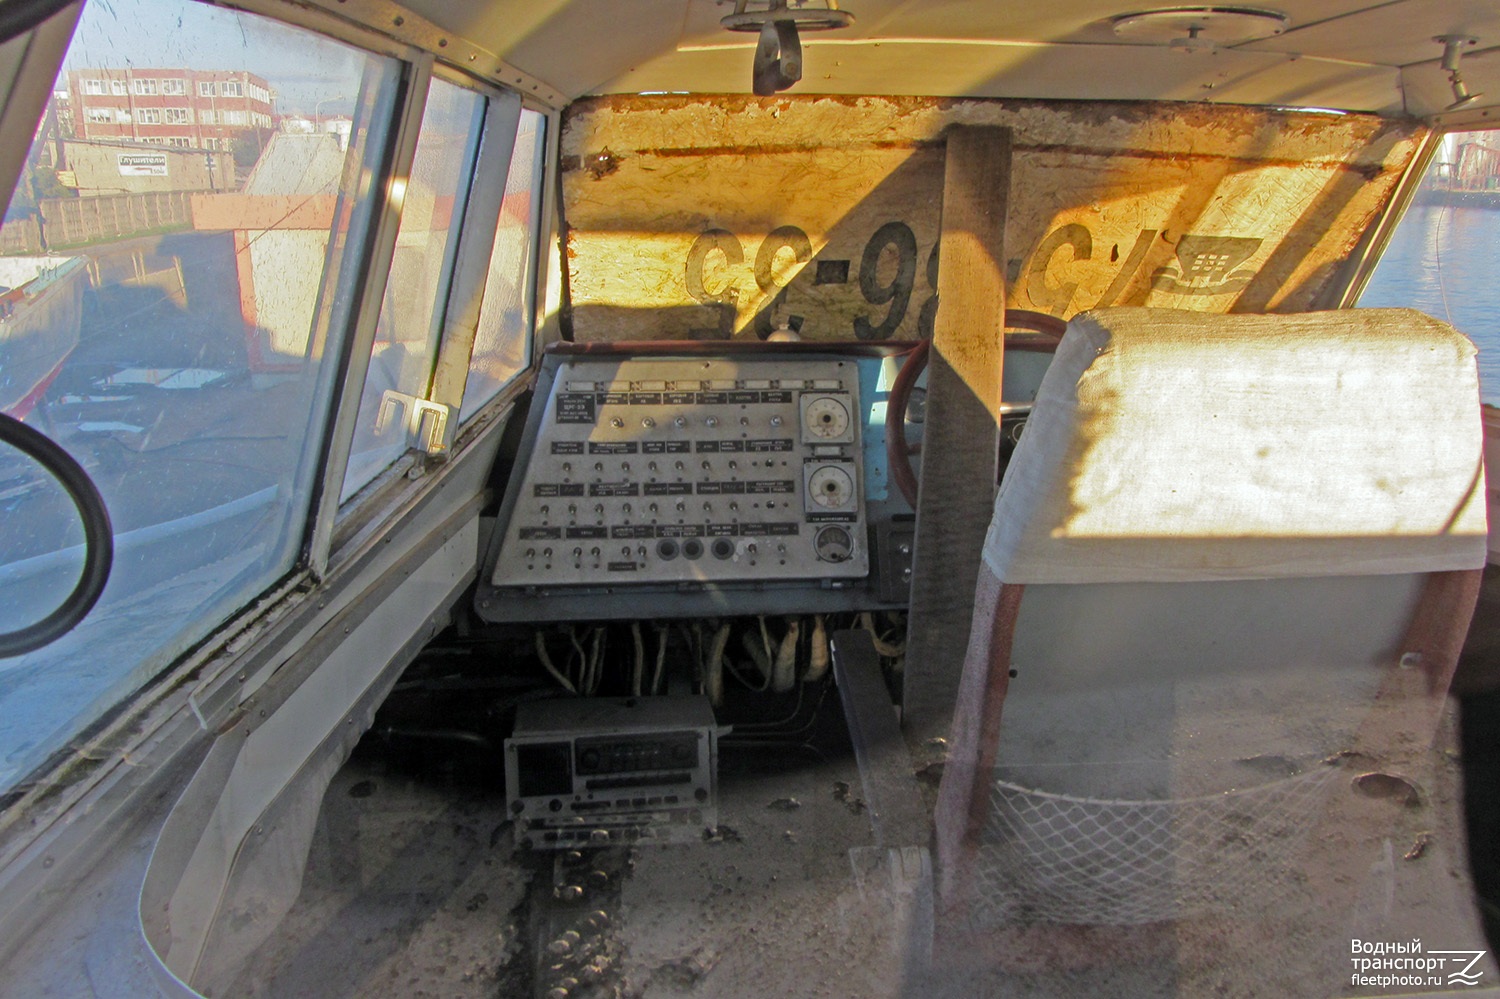 Полесье-10. Wheelhouses, Control panels